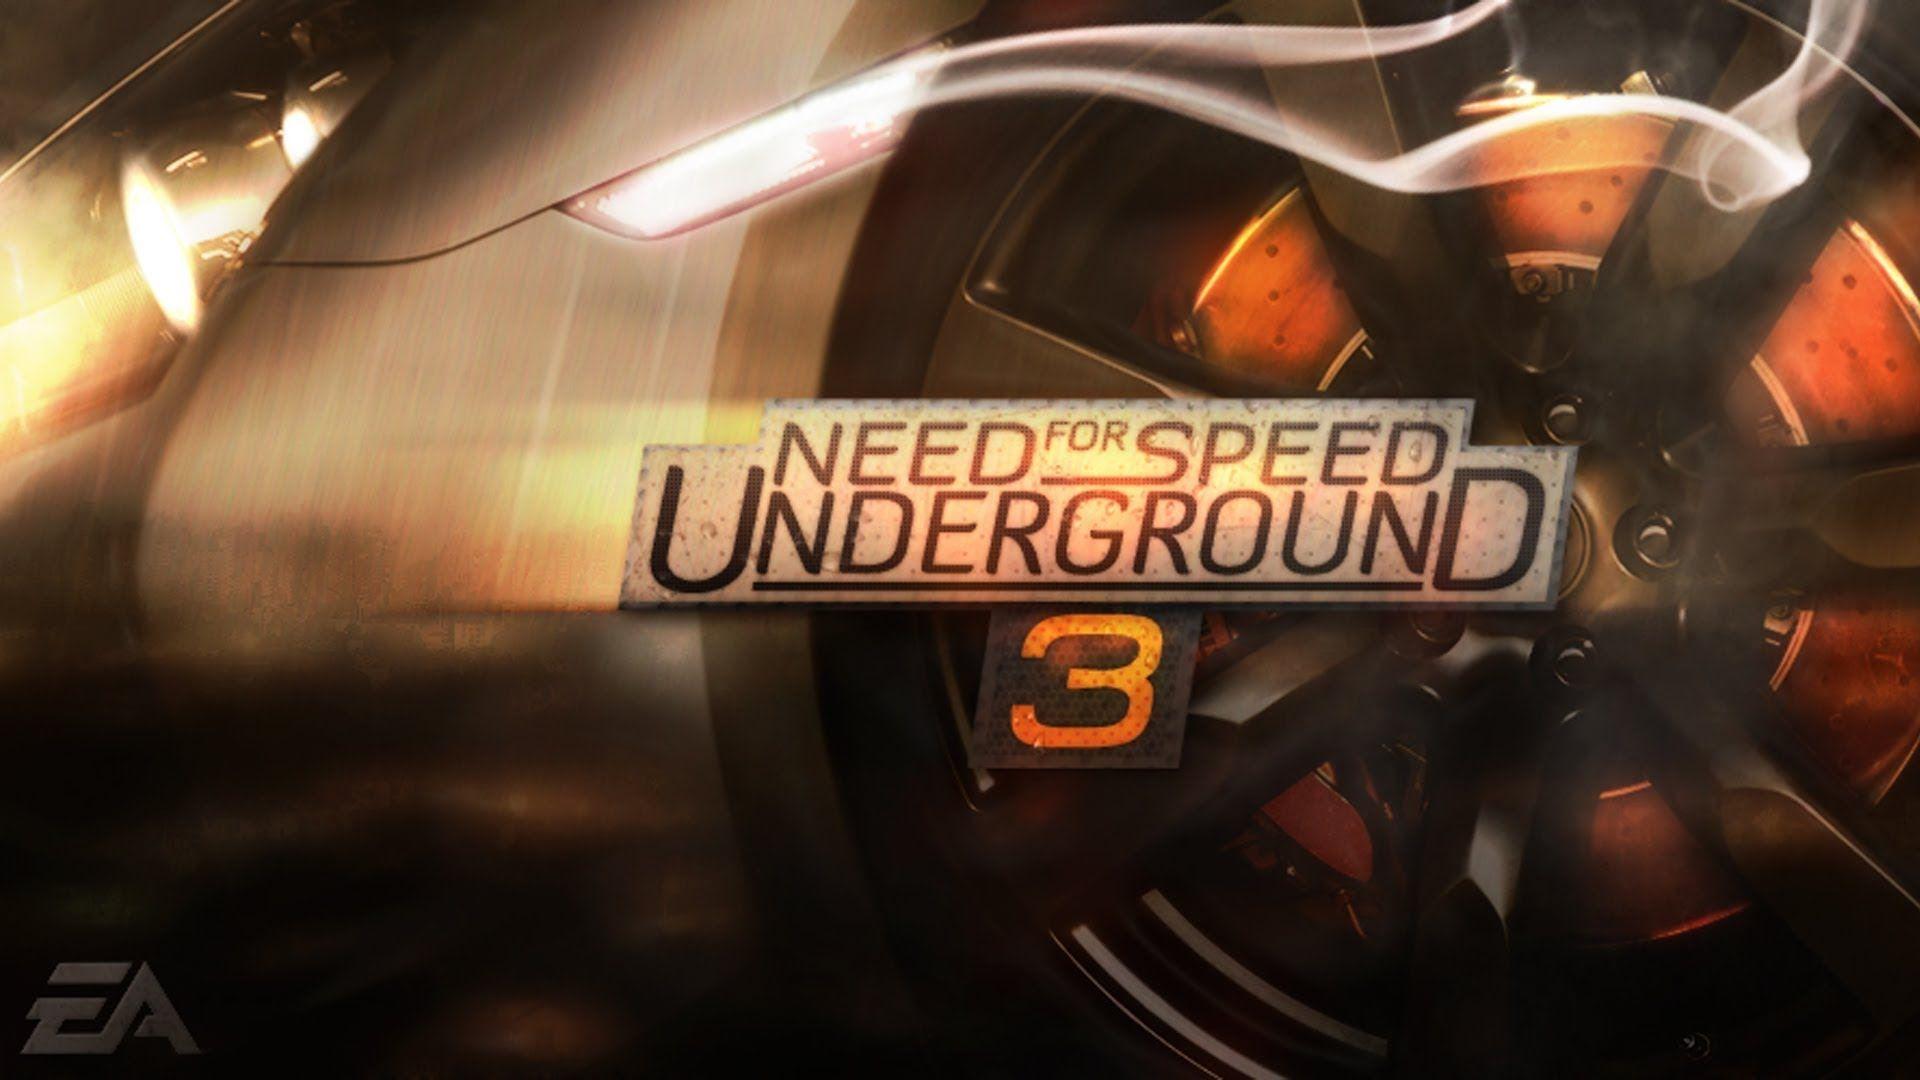 Nfs underground 3. Нфс андеграунд 3. Need for Speed Underground 3. Need for Speed андеграунд 3. Нид фор СПИД андеграунд 3 диск.